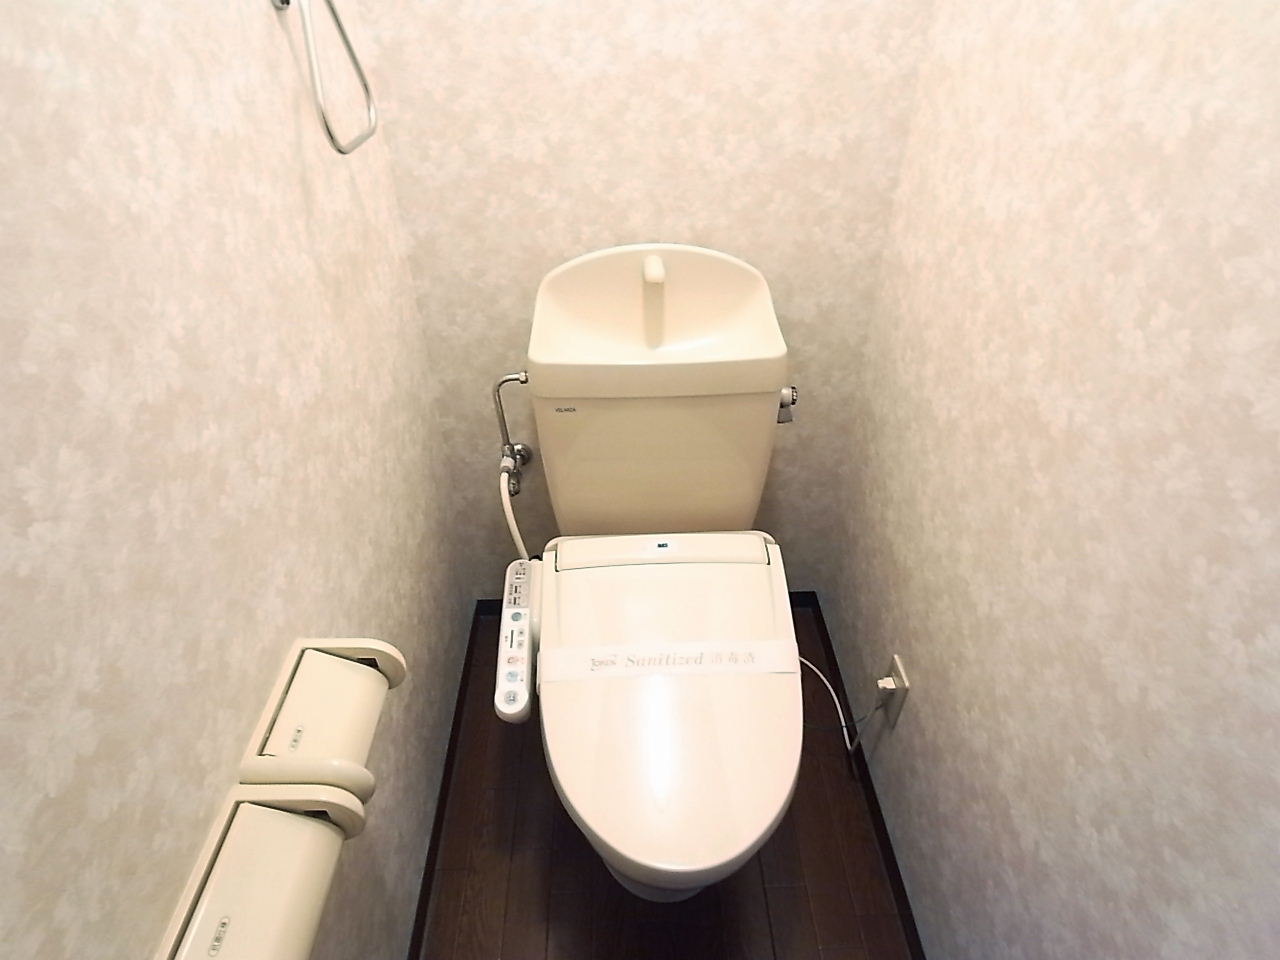 Toilet.  ※ Isomorphic reference photograph